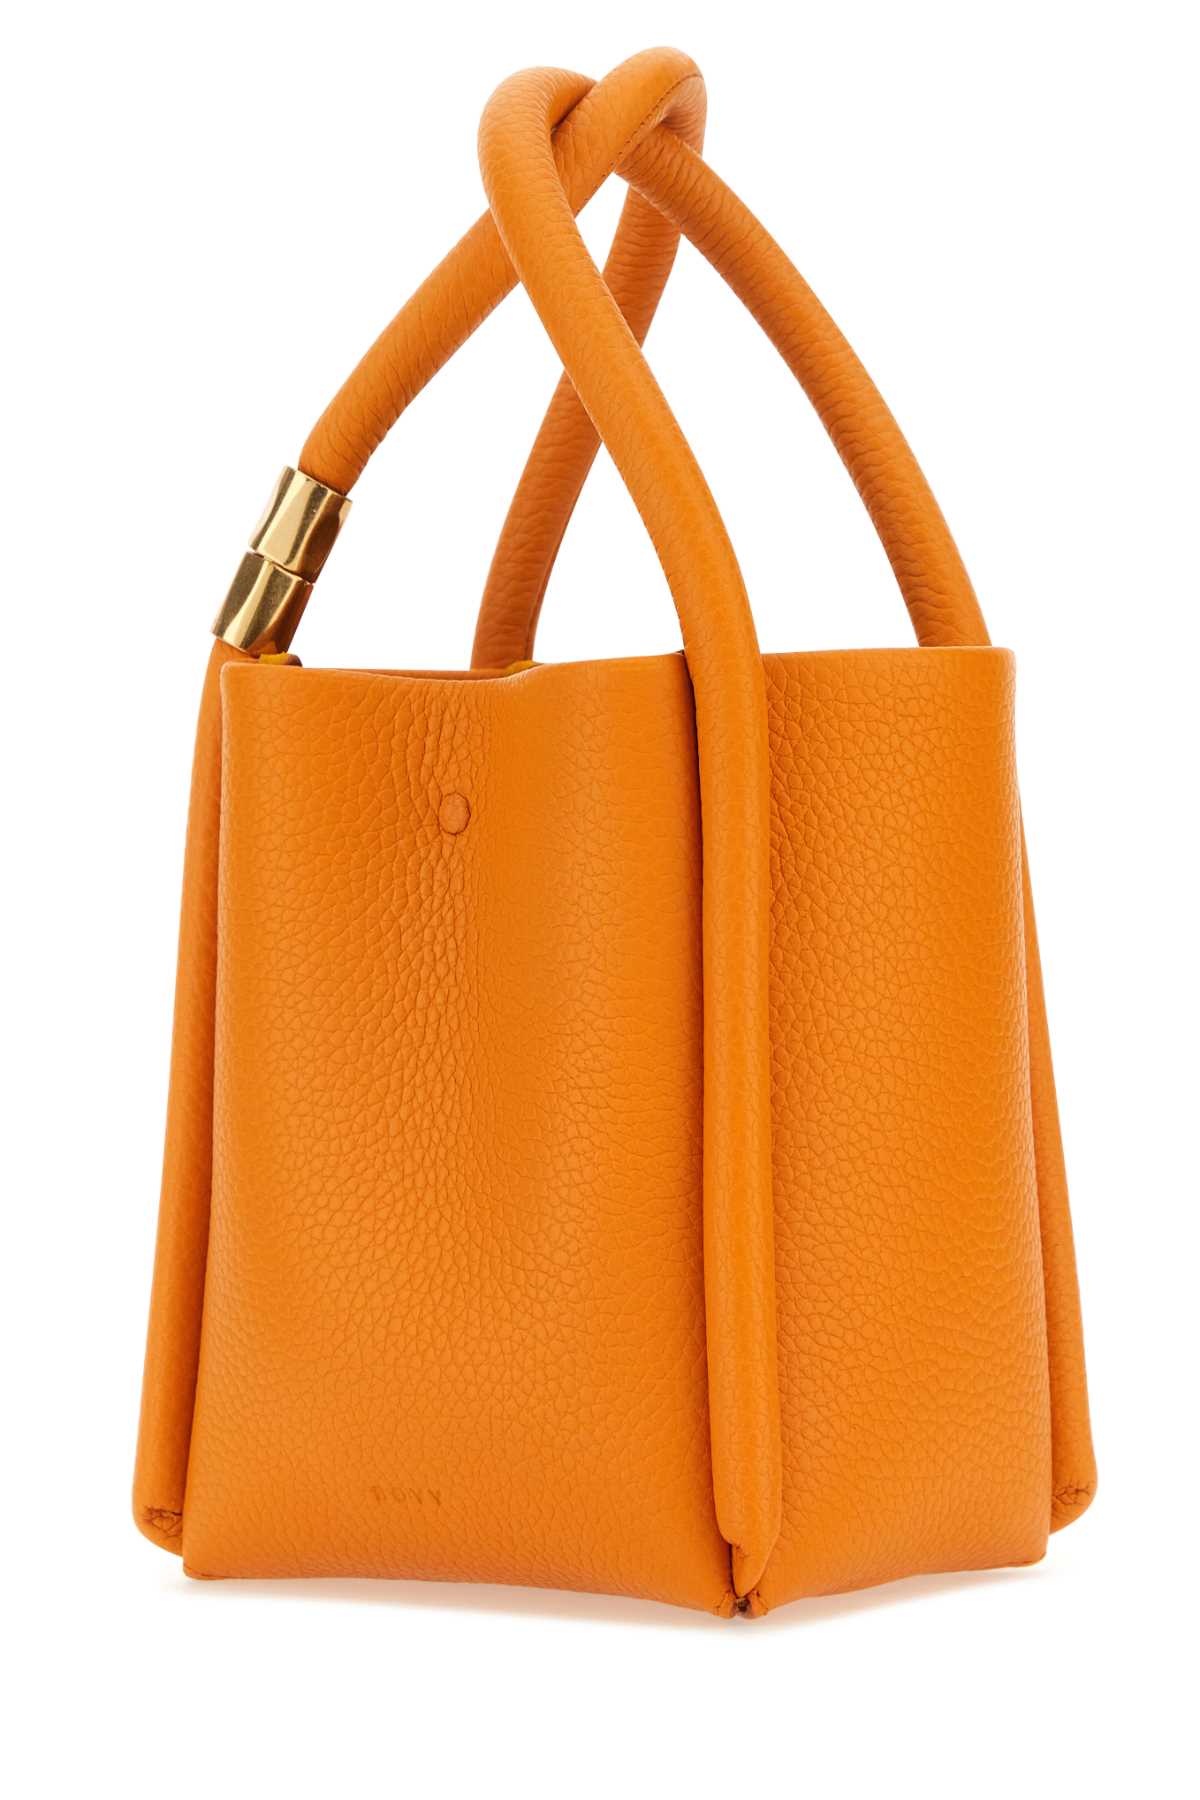 Boyy Orange Leather Lotus 12 Handbag In Apricot